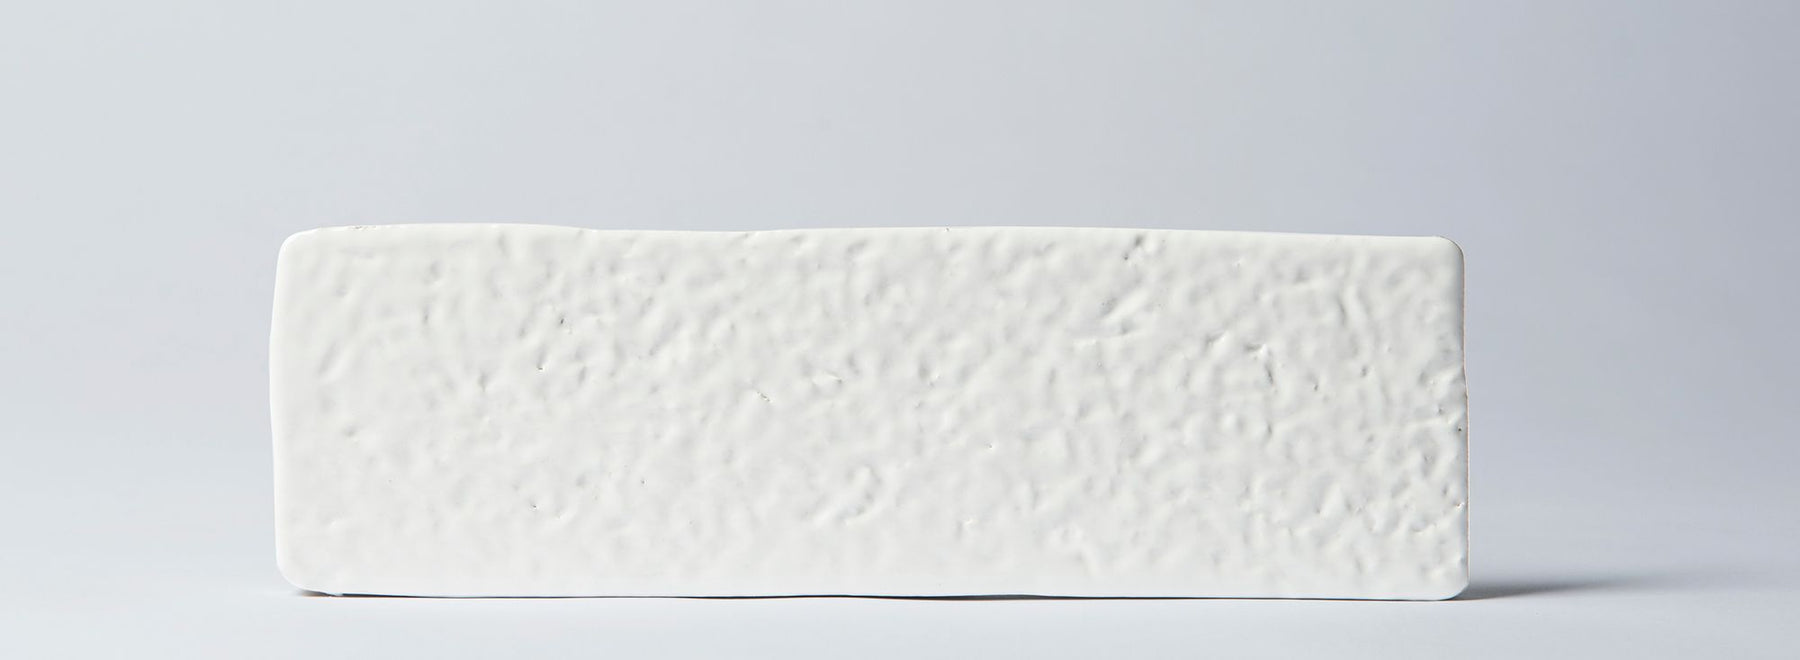 Ceres Rustico White Ceramic Tile - Glossy